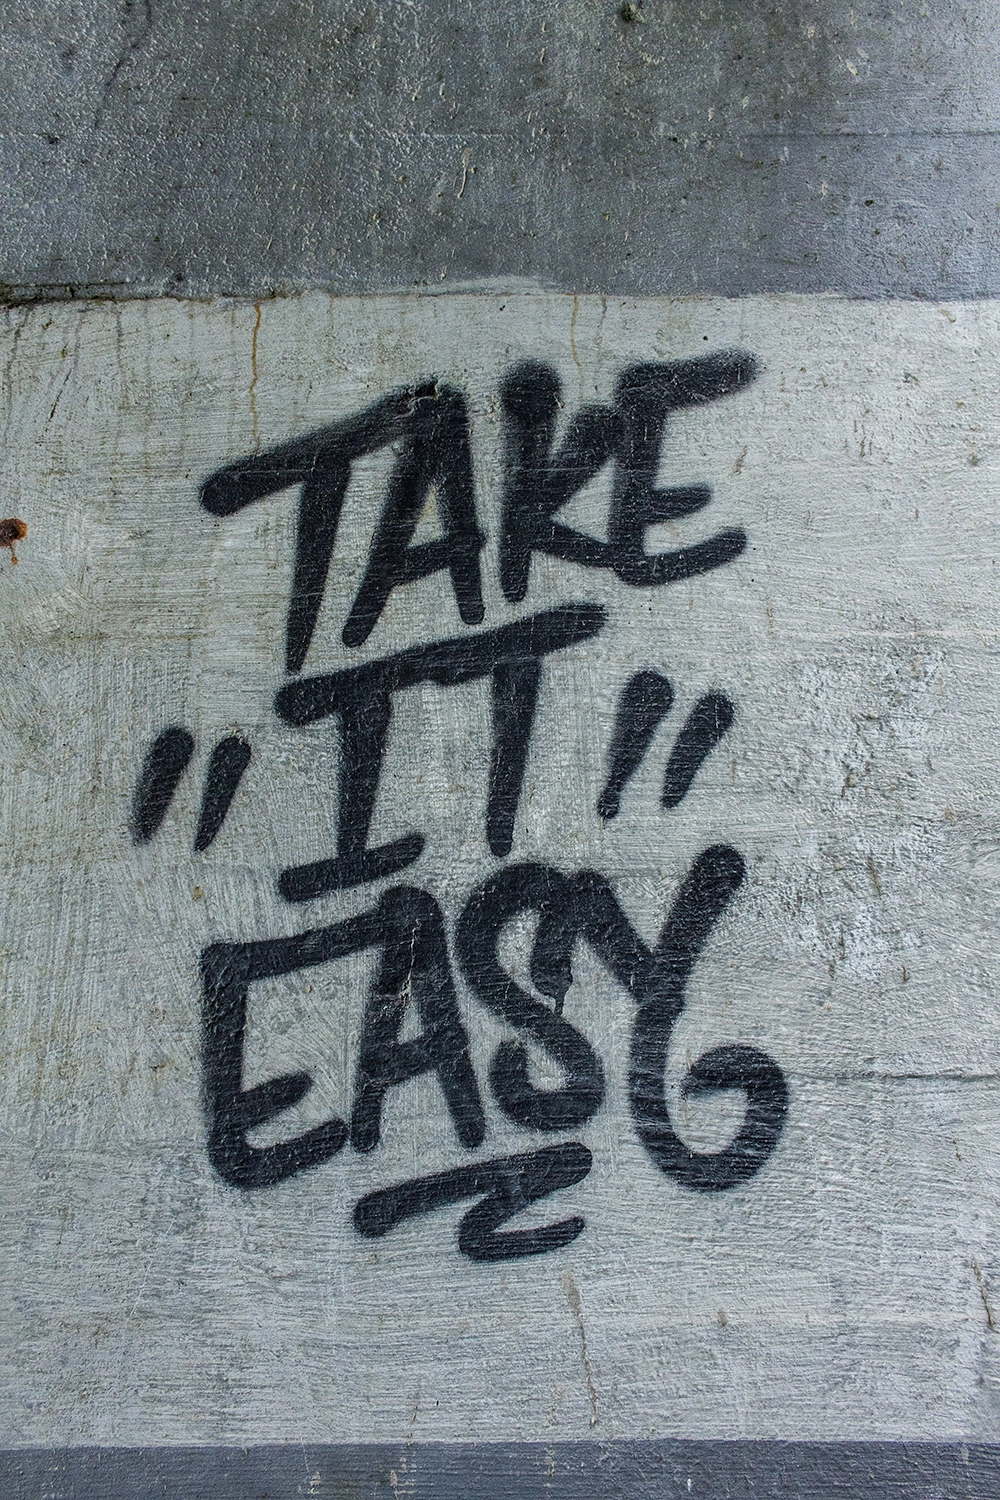 Graffiti on the wall saying "Take it easy".